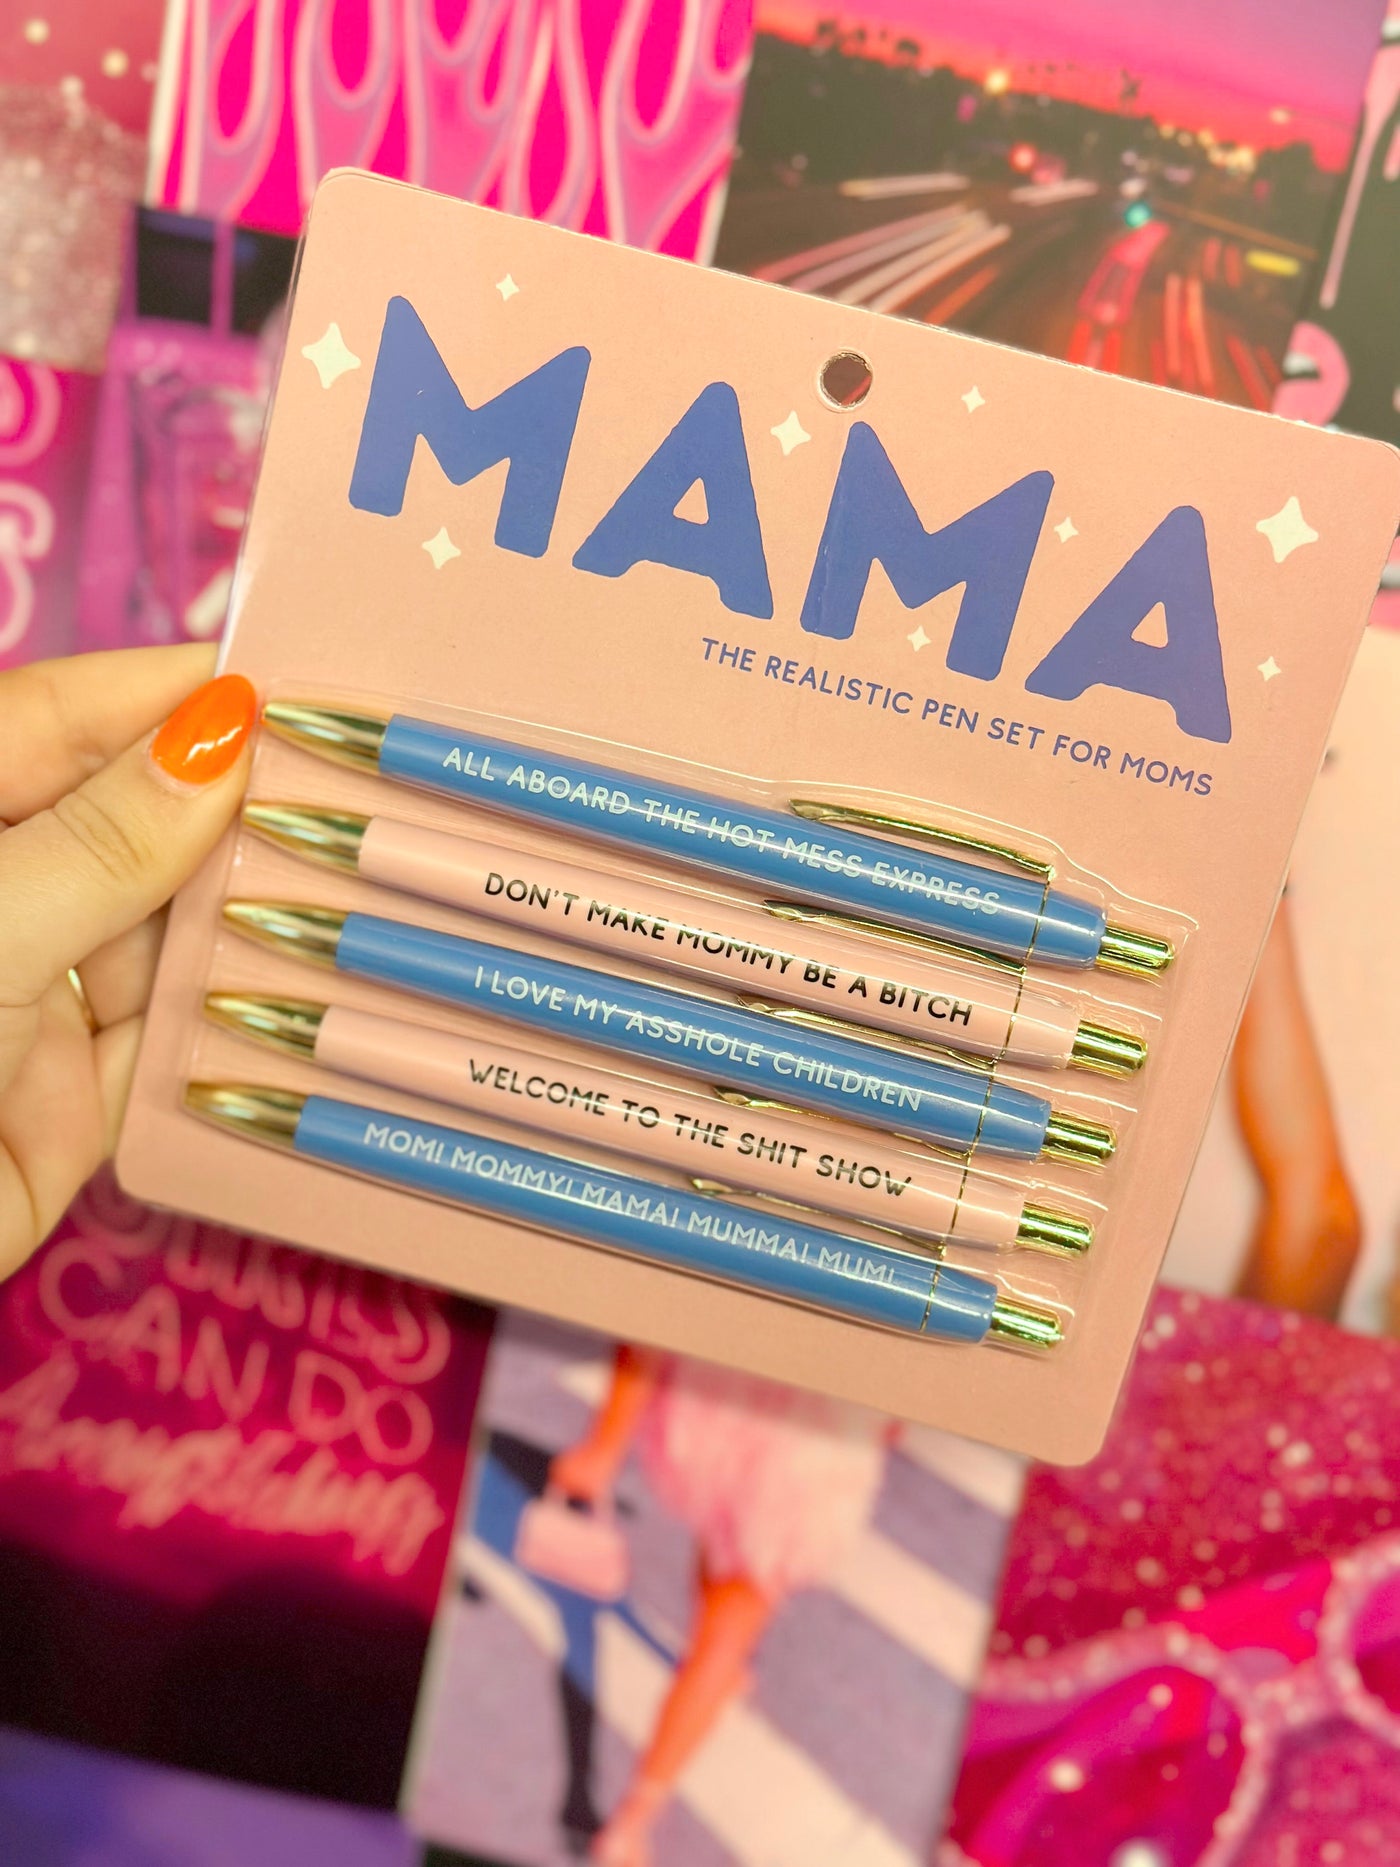 Mama Pen Set